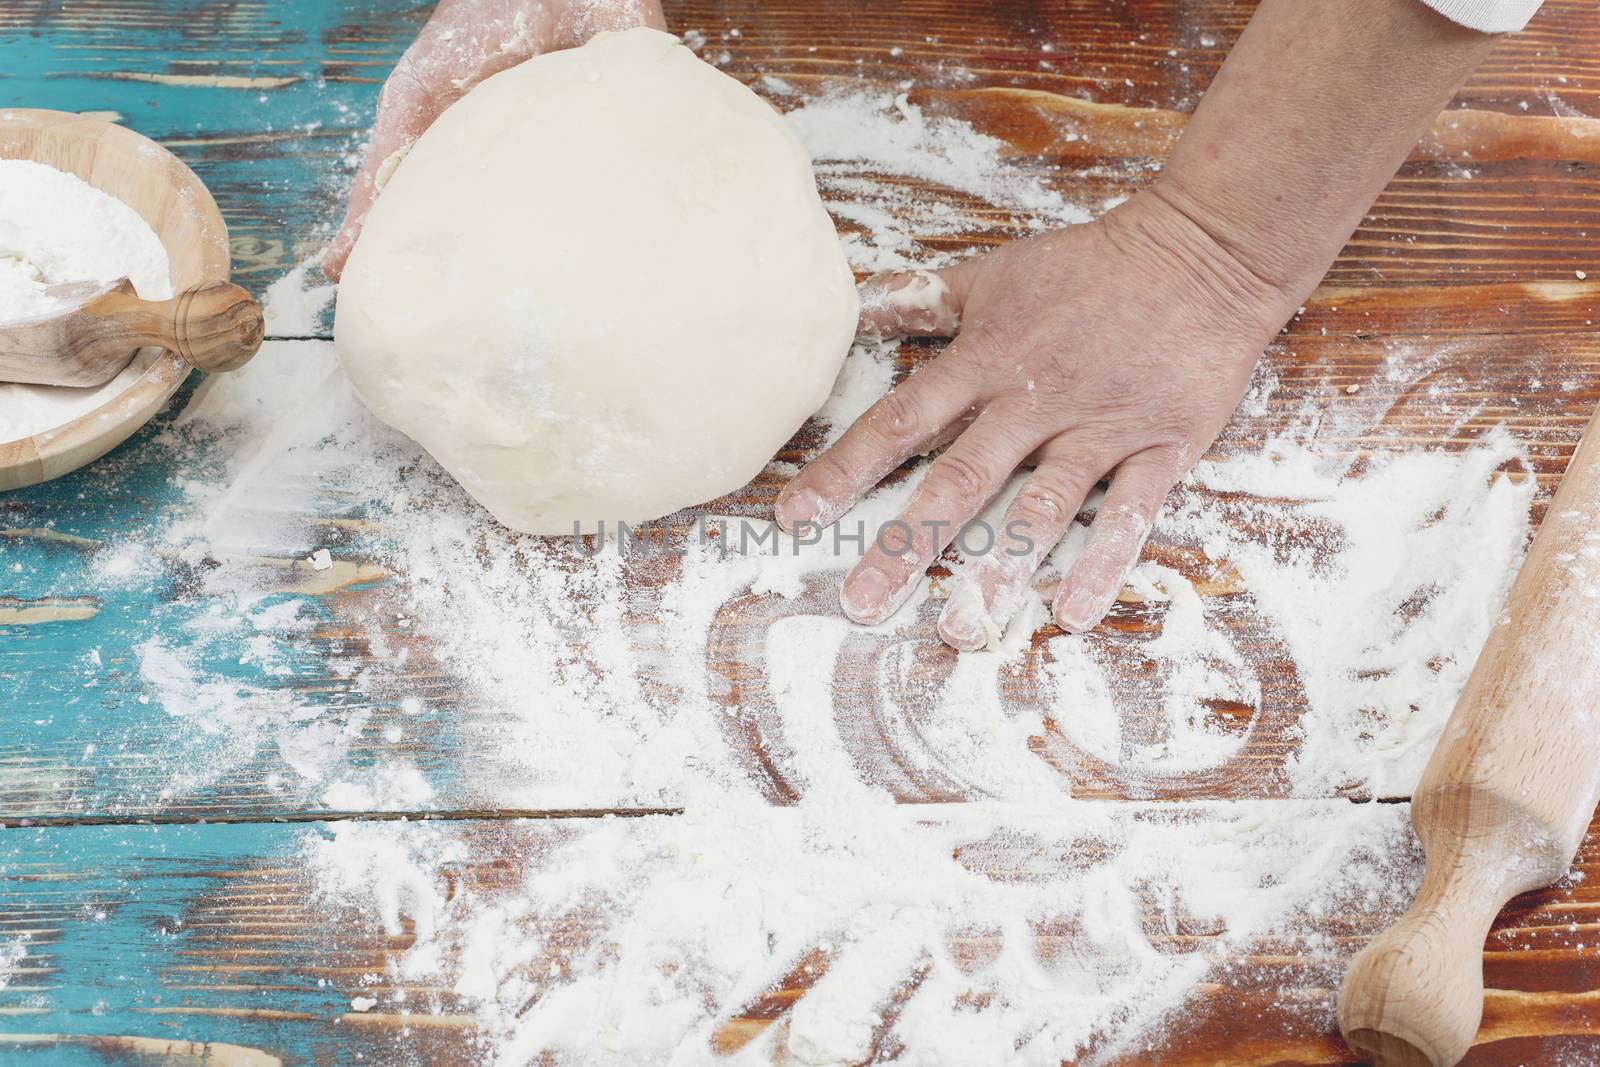 Kneading the dough by Slast20